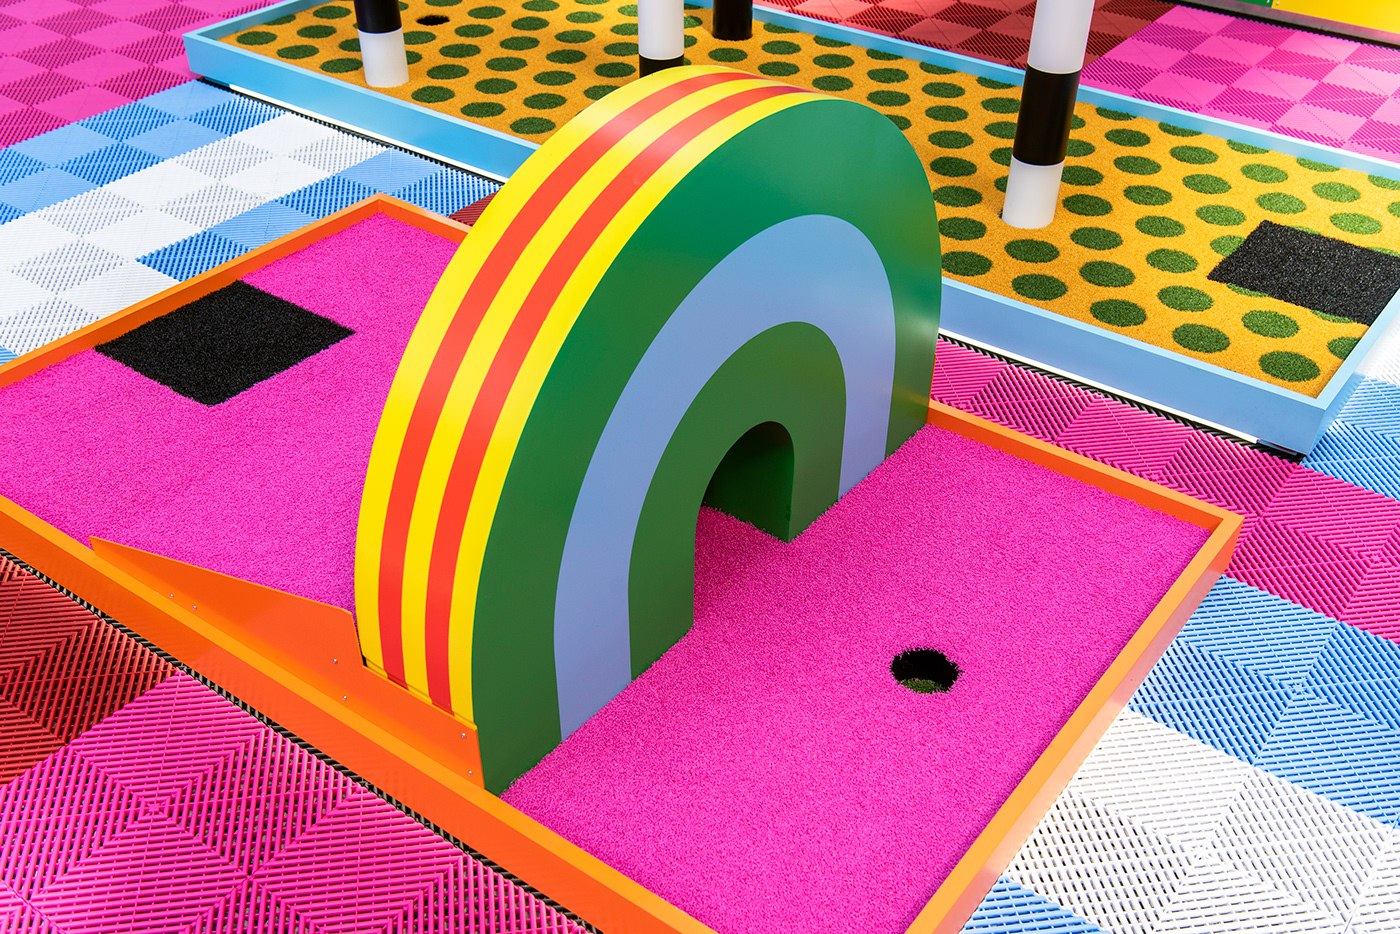 colorful immersive installation interactive mini golf pattern Playground sculpture